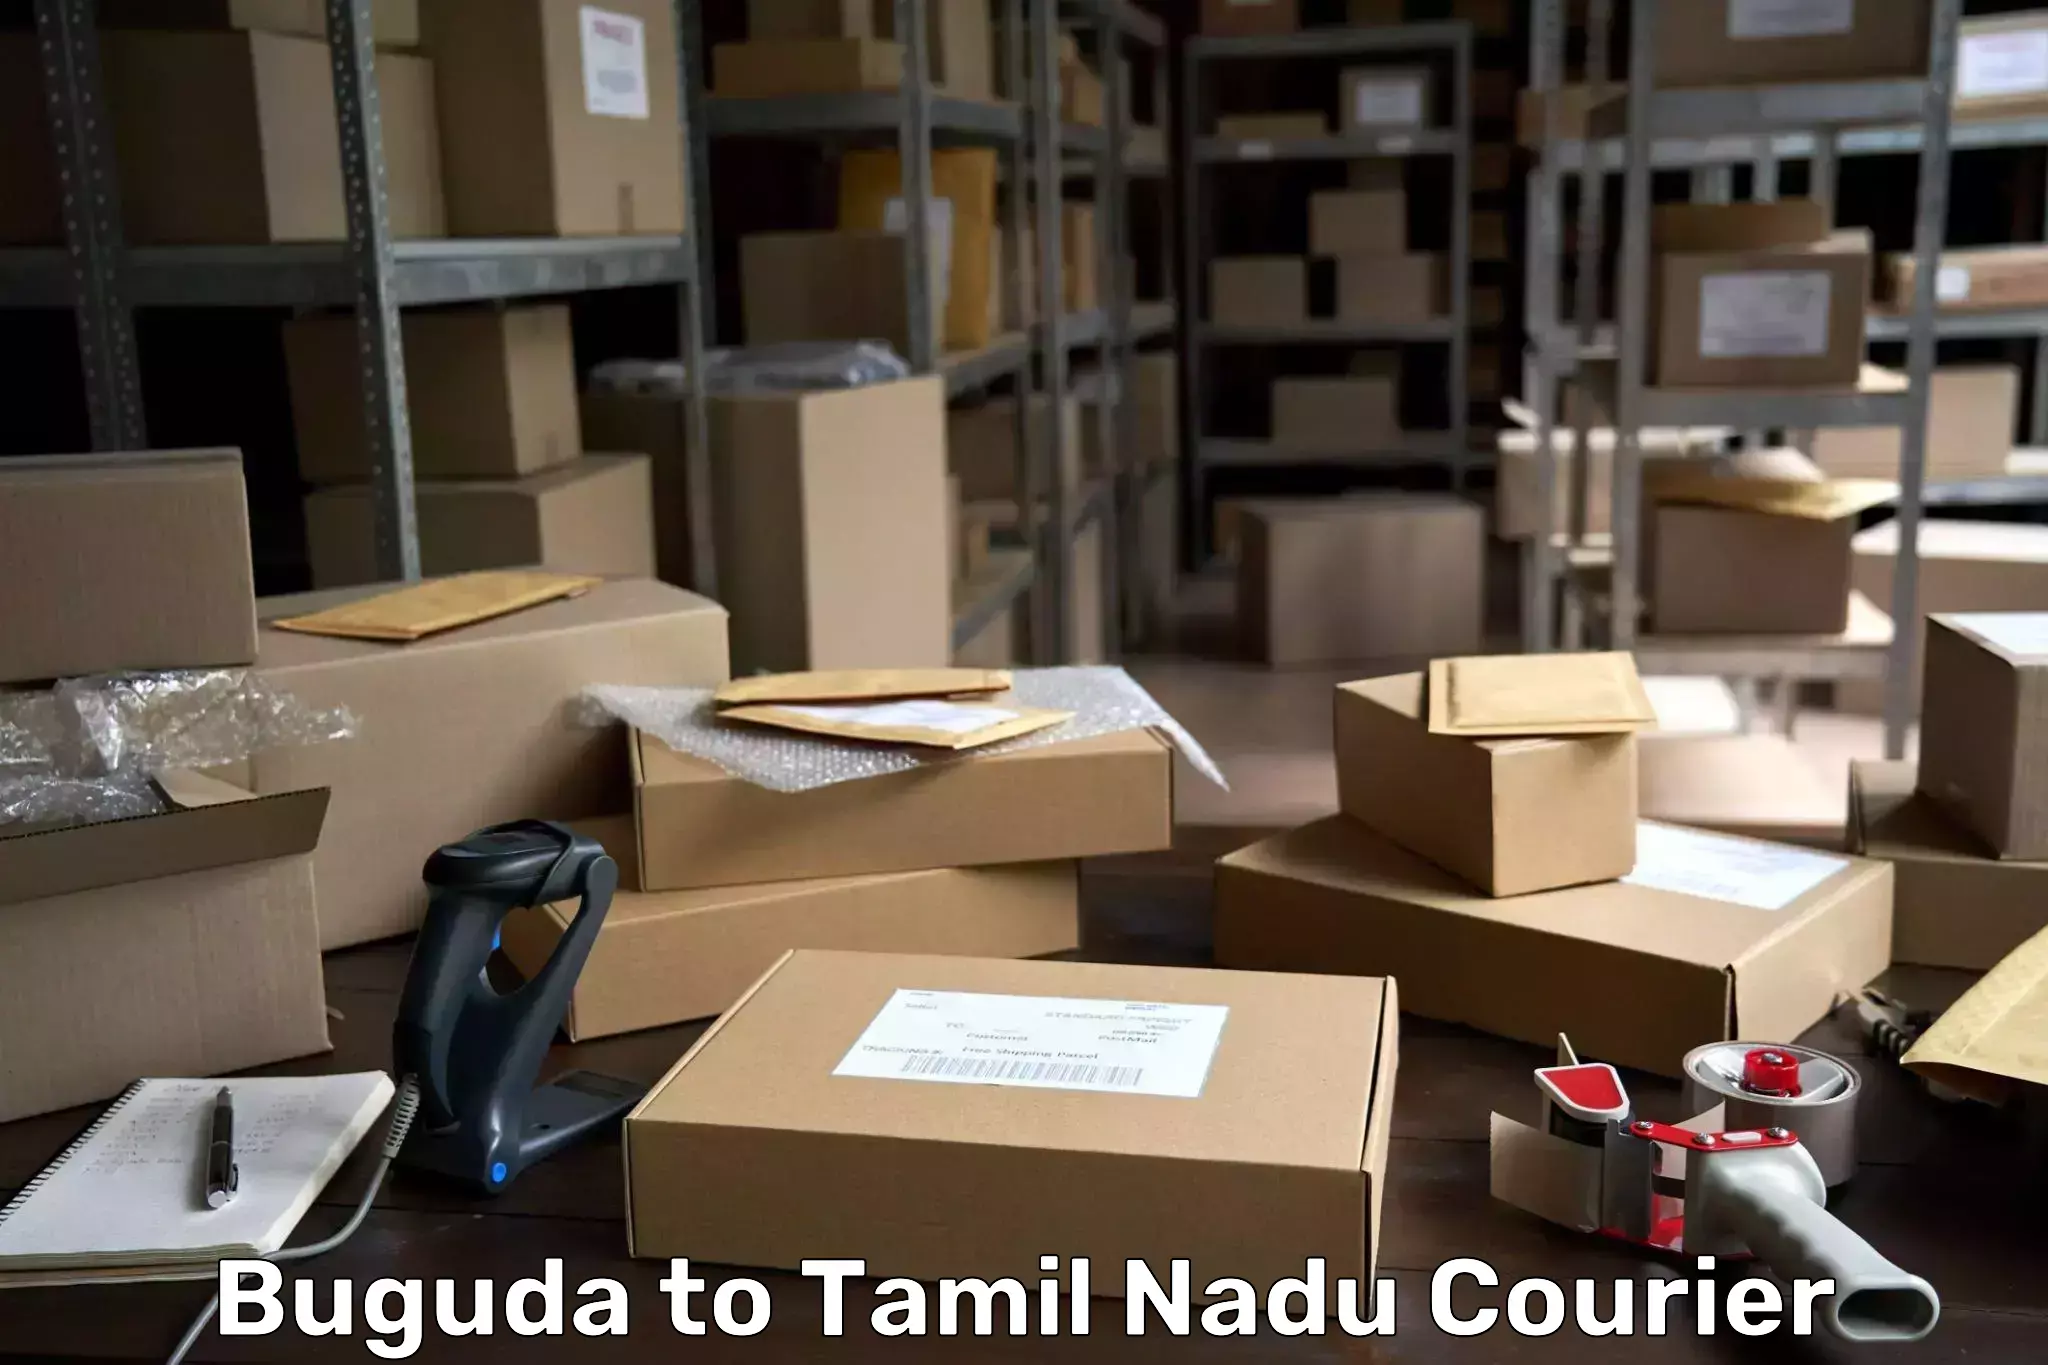 Digital courier platforms Buguda to Tamil Nadu